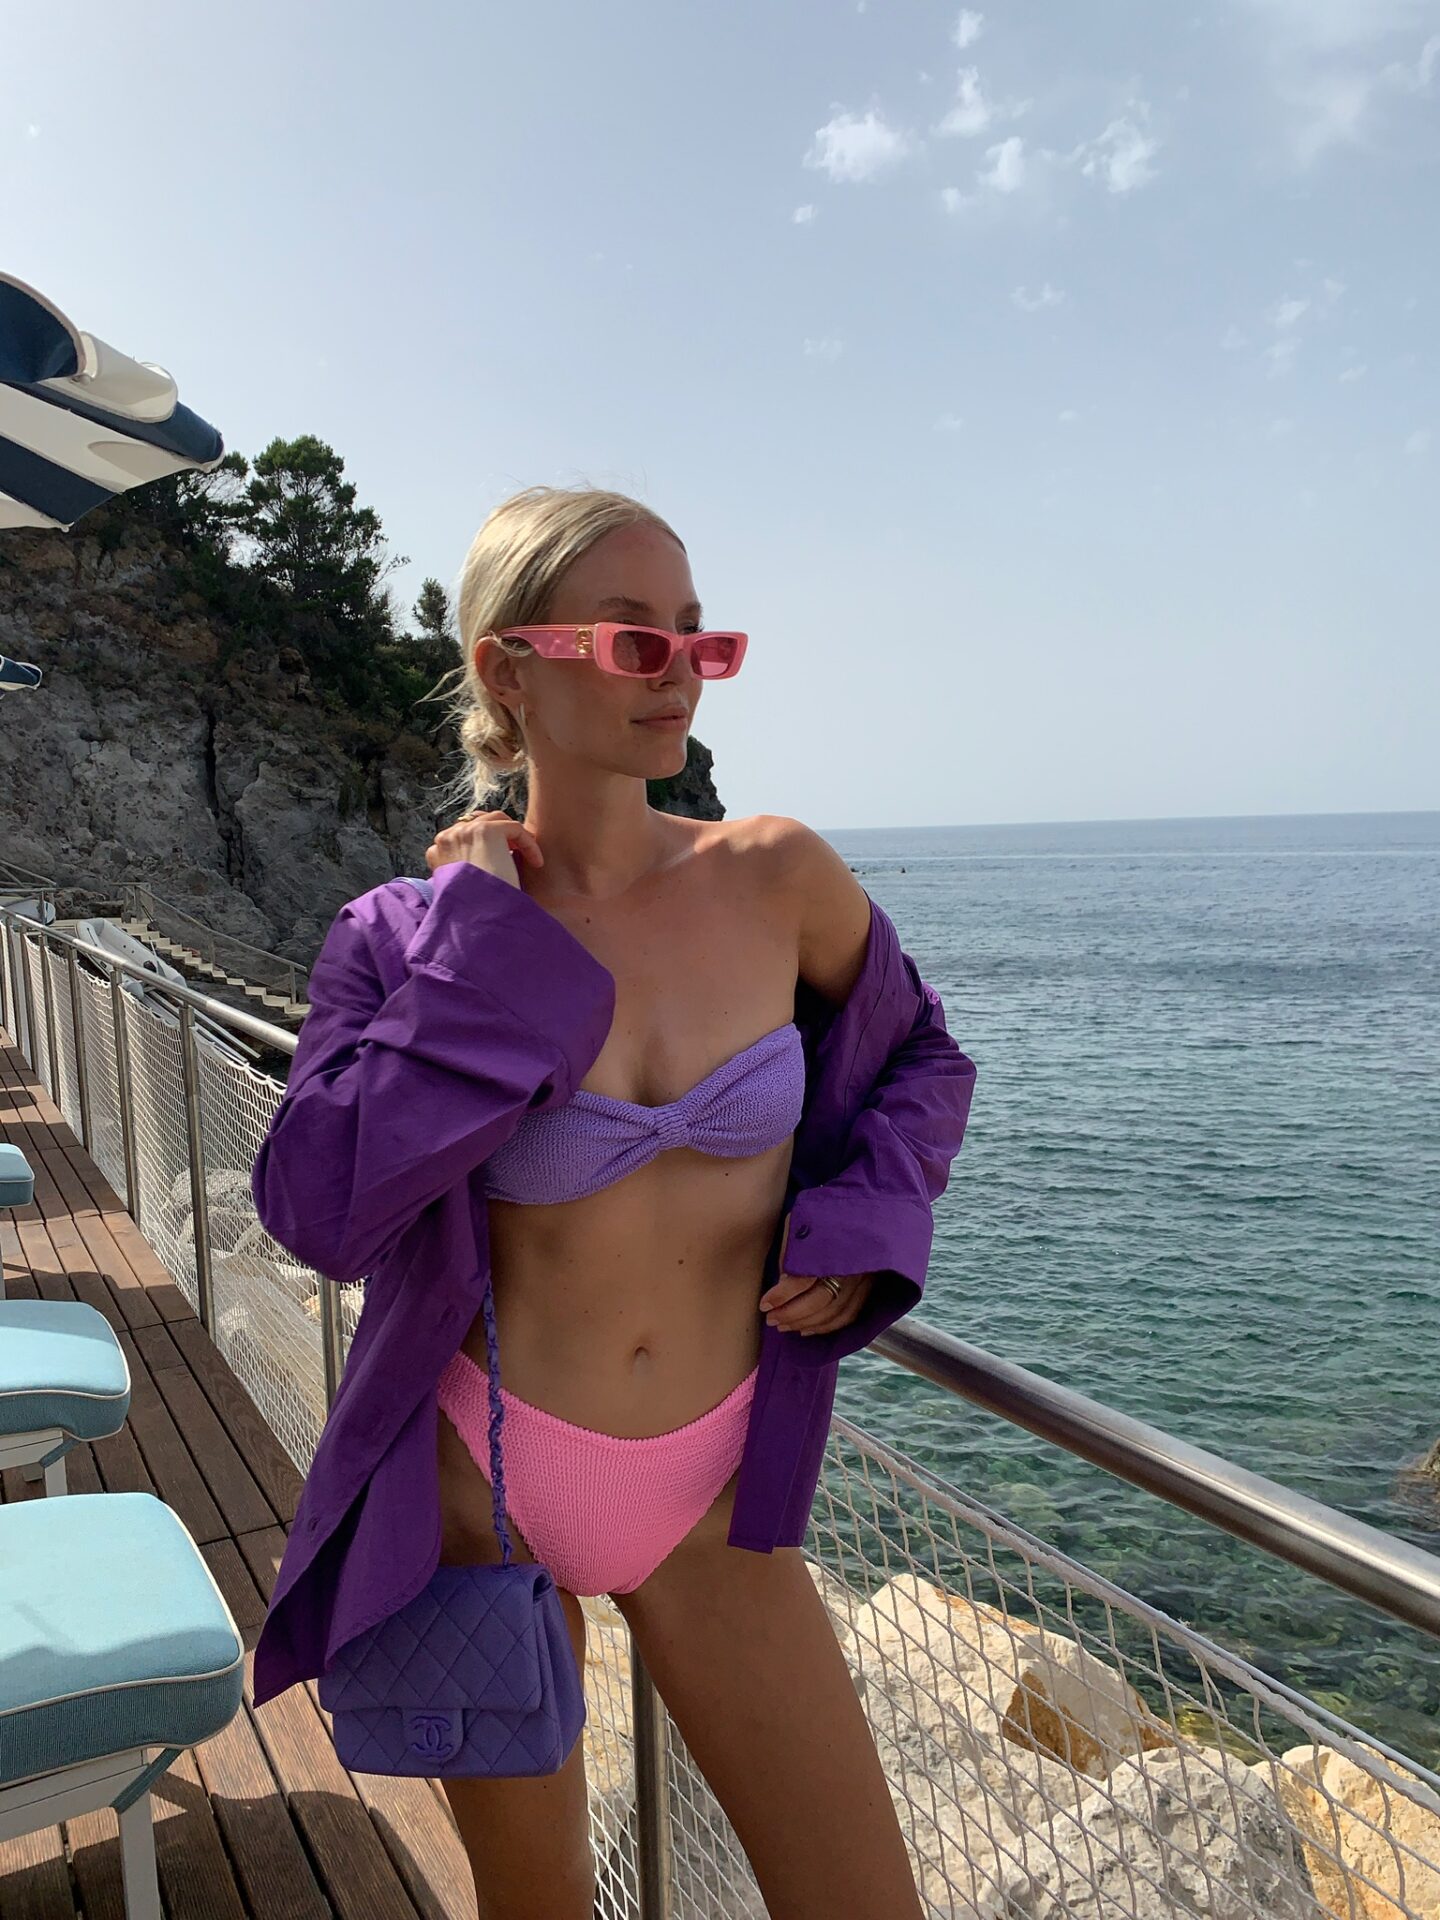 Leonie Hanne Tulum beach and Gucci swimsuit - Leonie Hanne